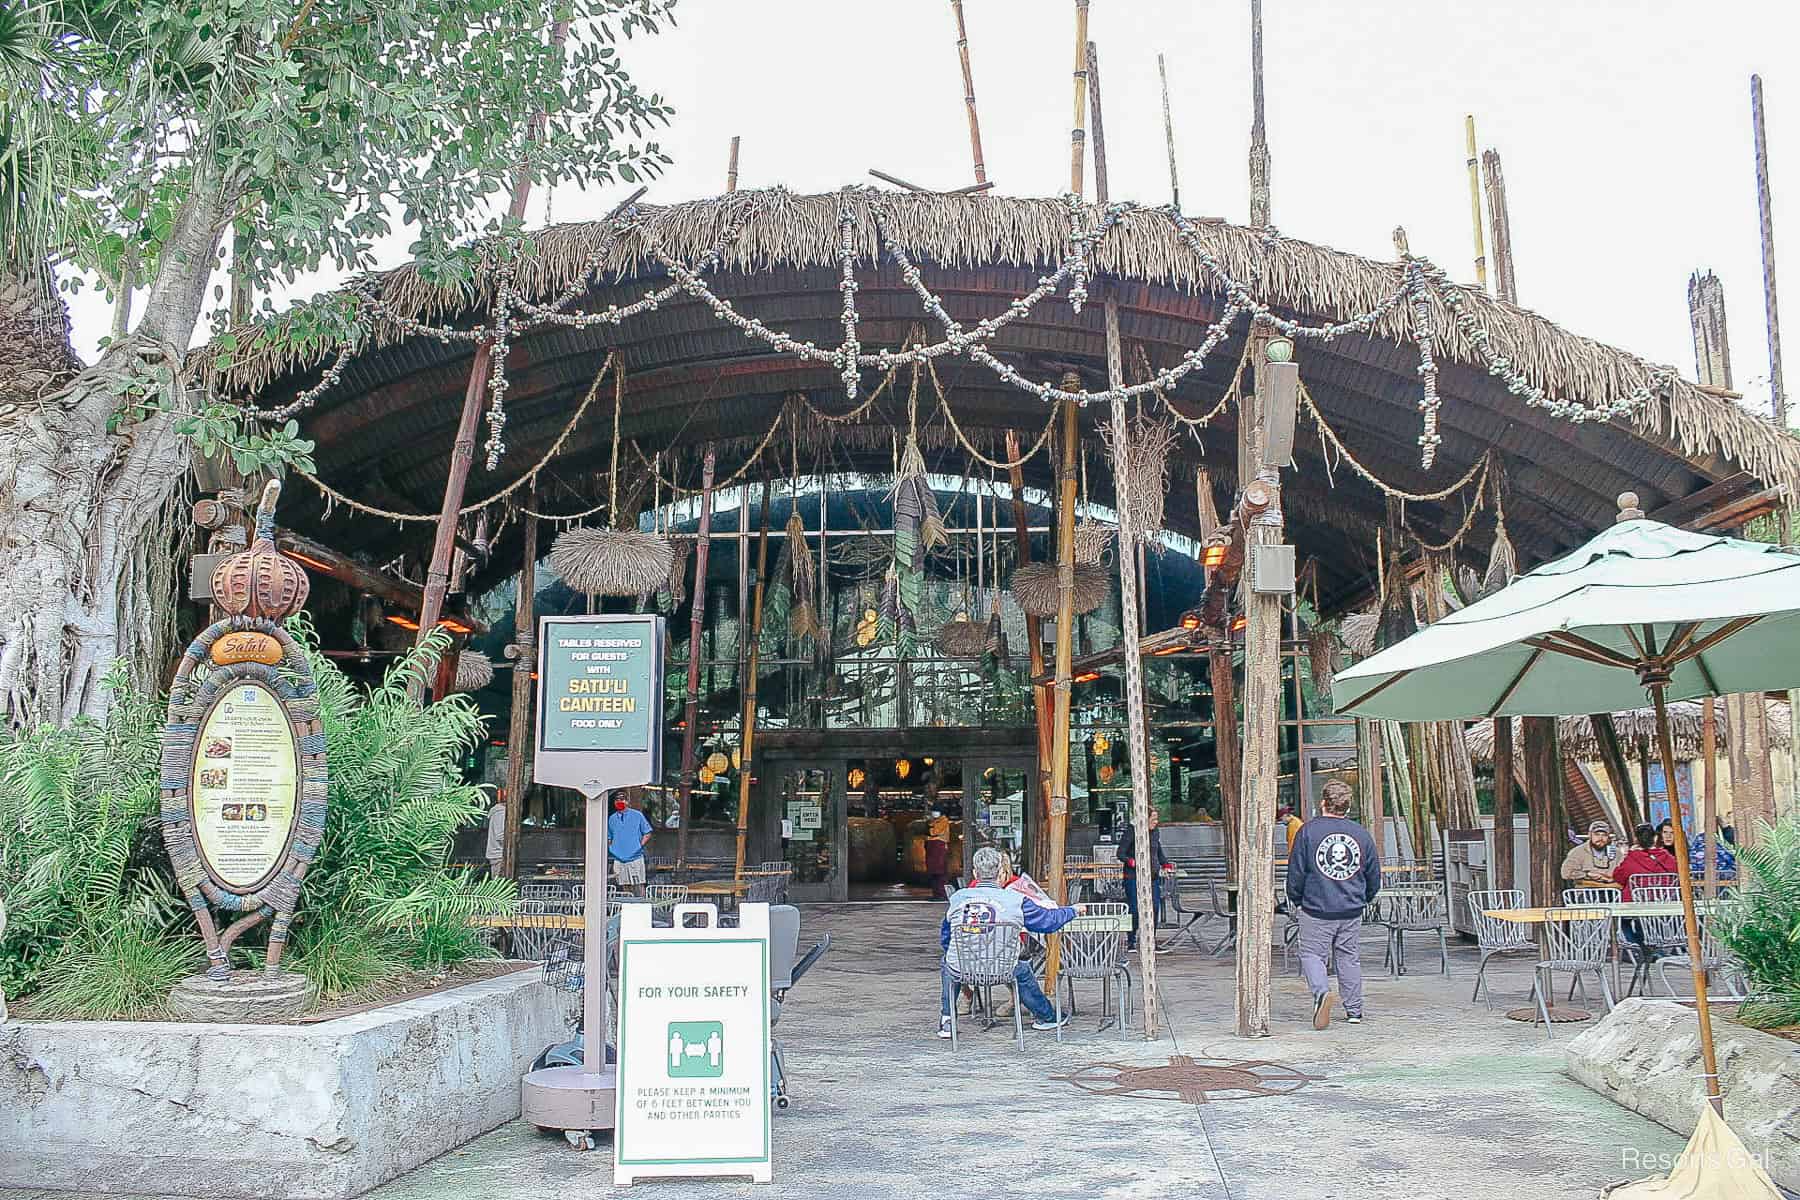 the entrance to Satu'li Canteen